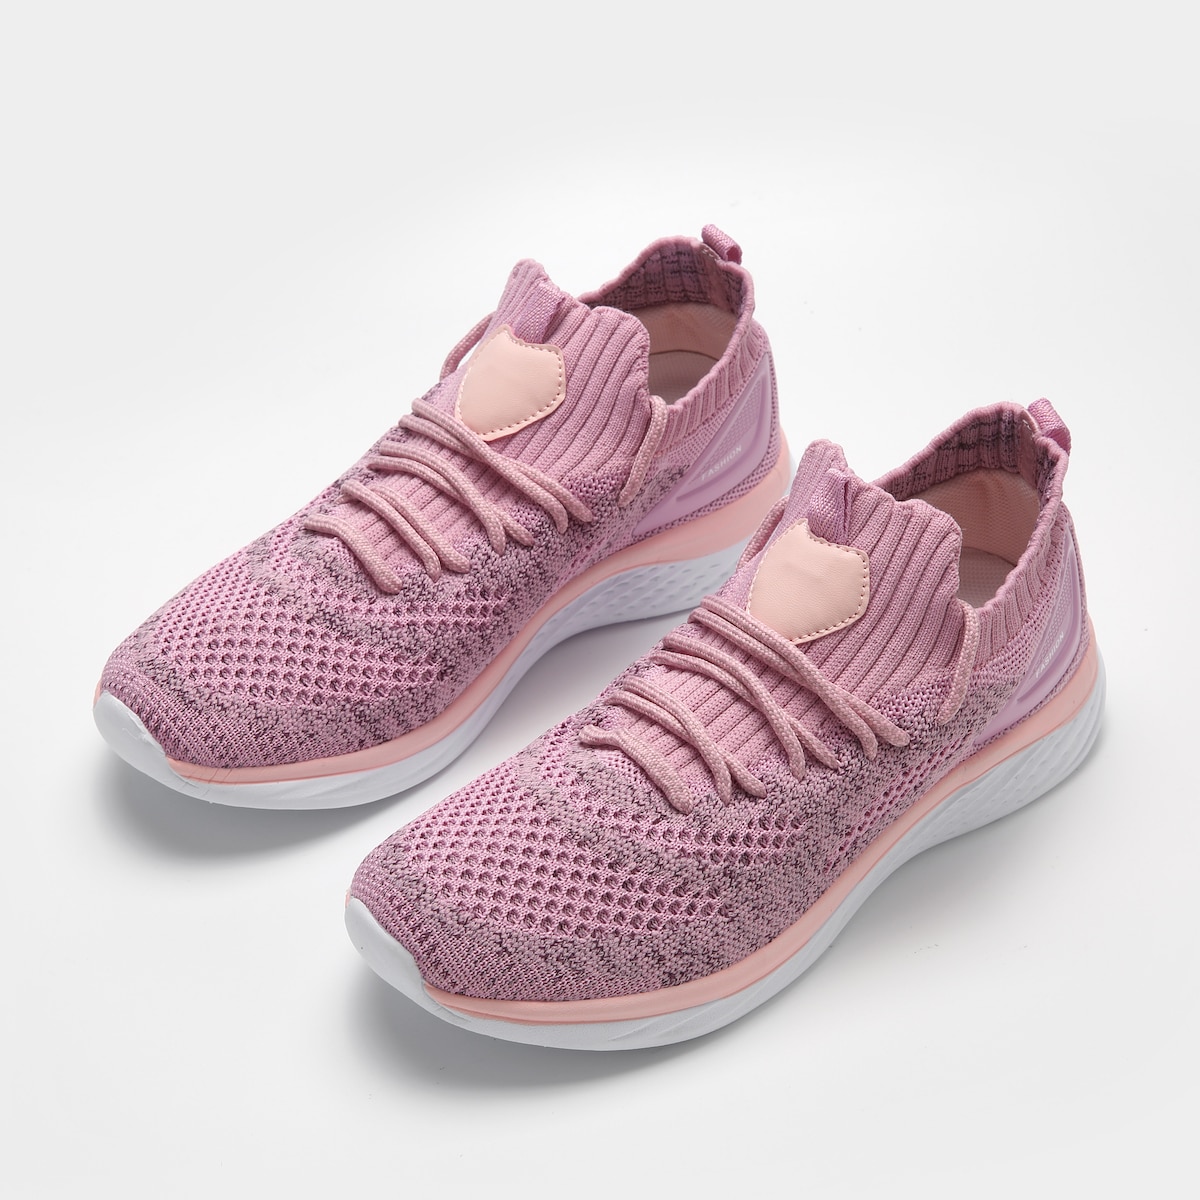 11: Sneakers Dame - Pink - model JH003